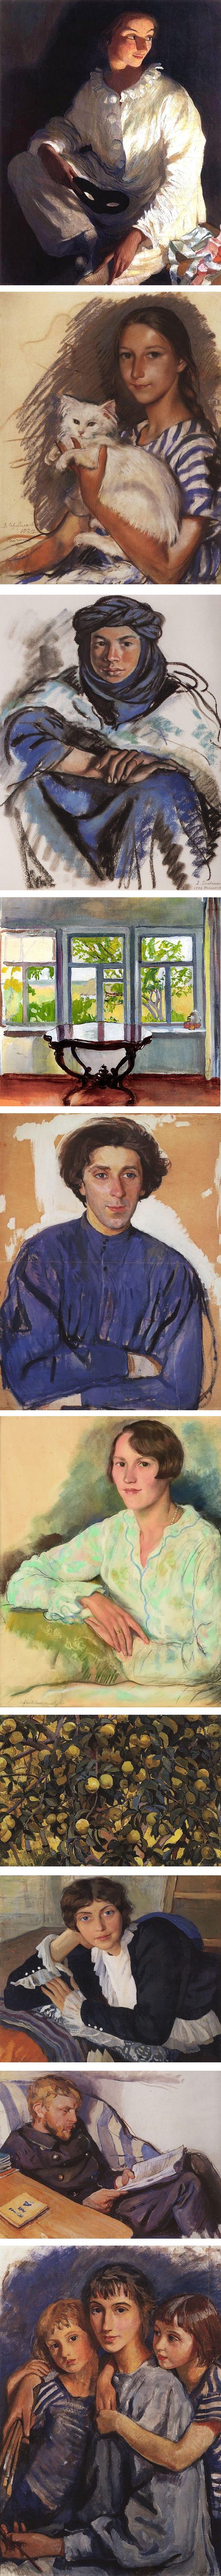 Ukrainian painter Zinaida Serebriakova